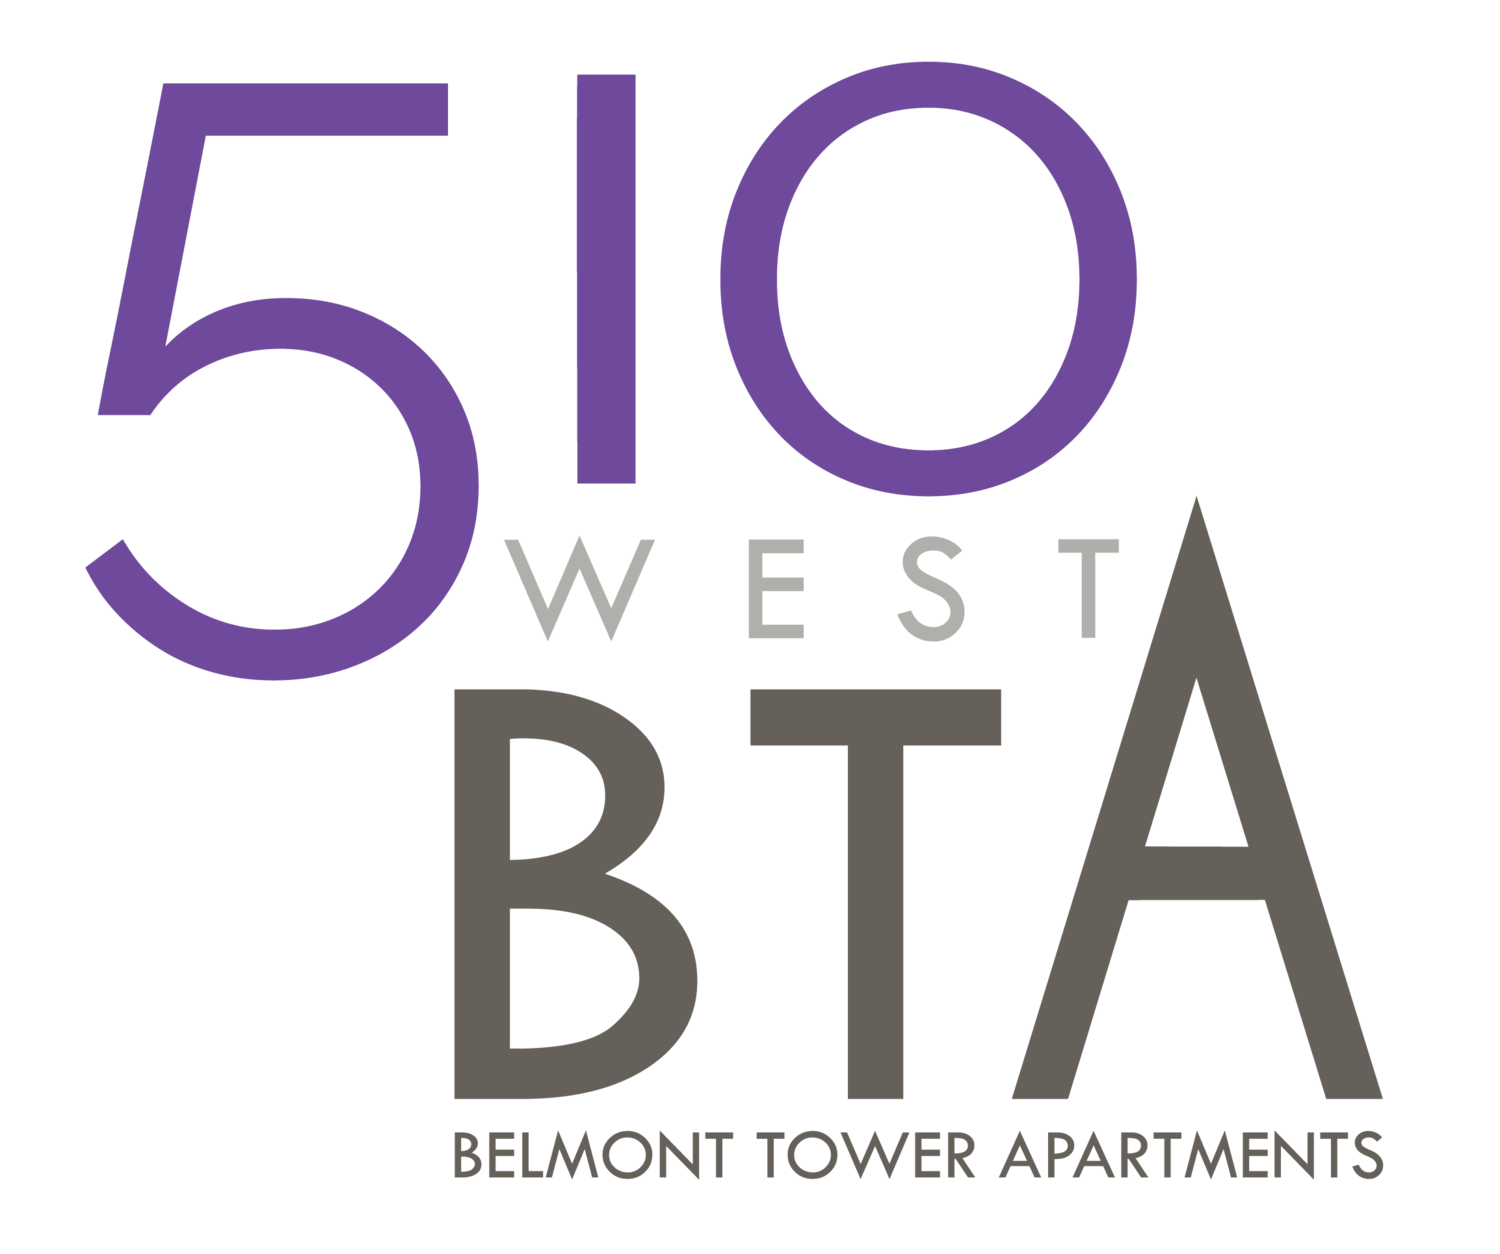 510 West BTA, Belmont Tower Apartments, 510 W Belmont